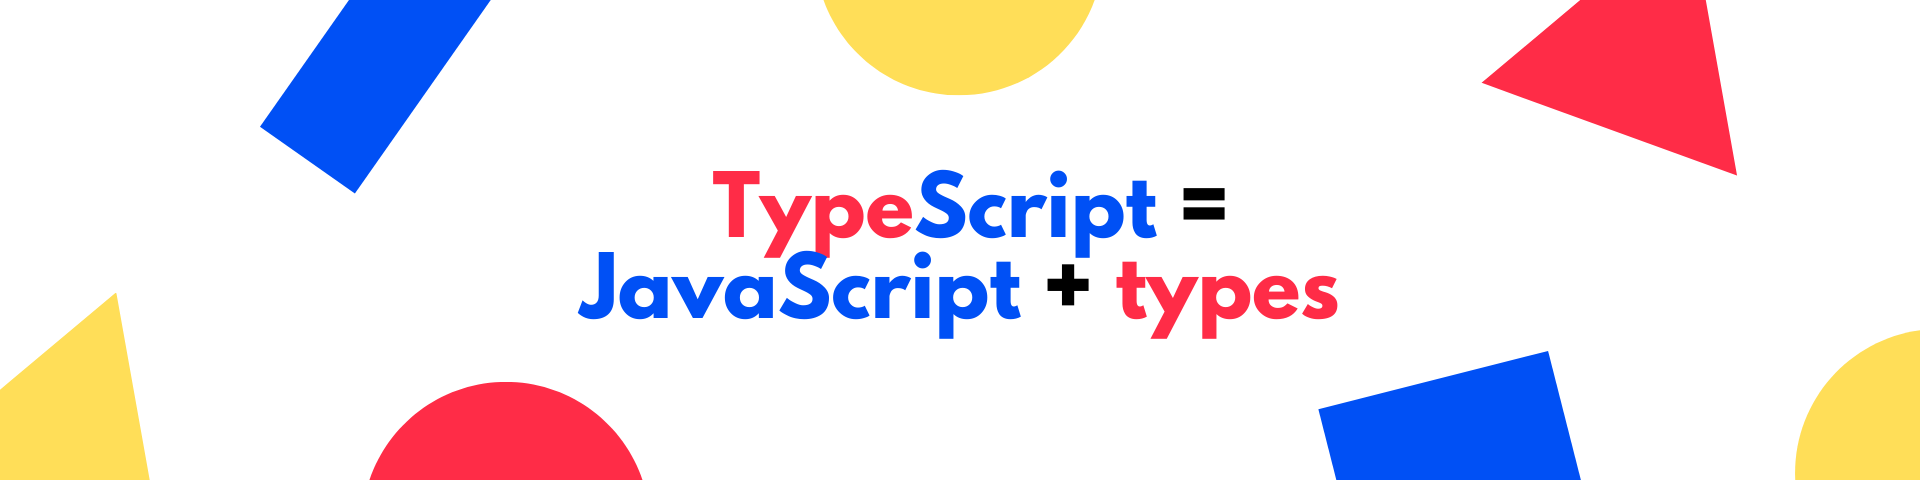 TypeScript-JavaScriptPlusTypes